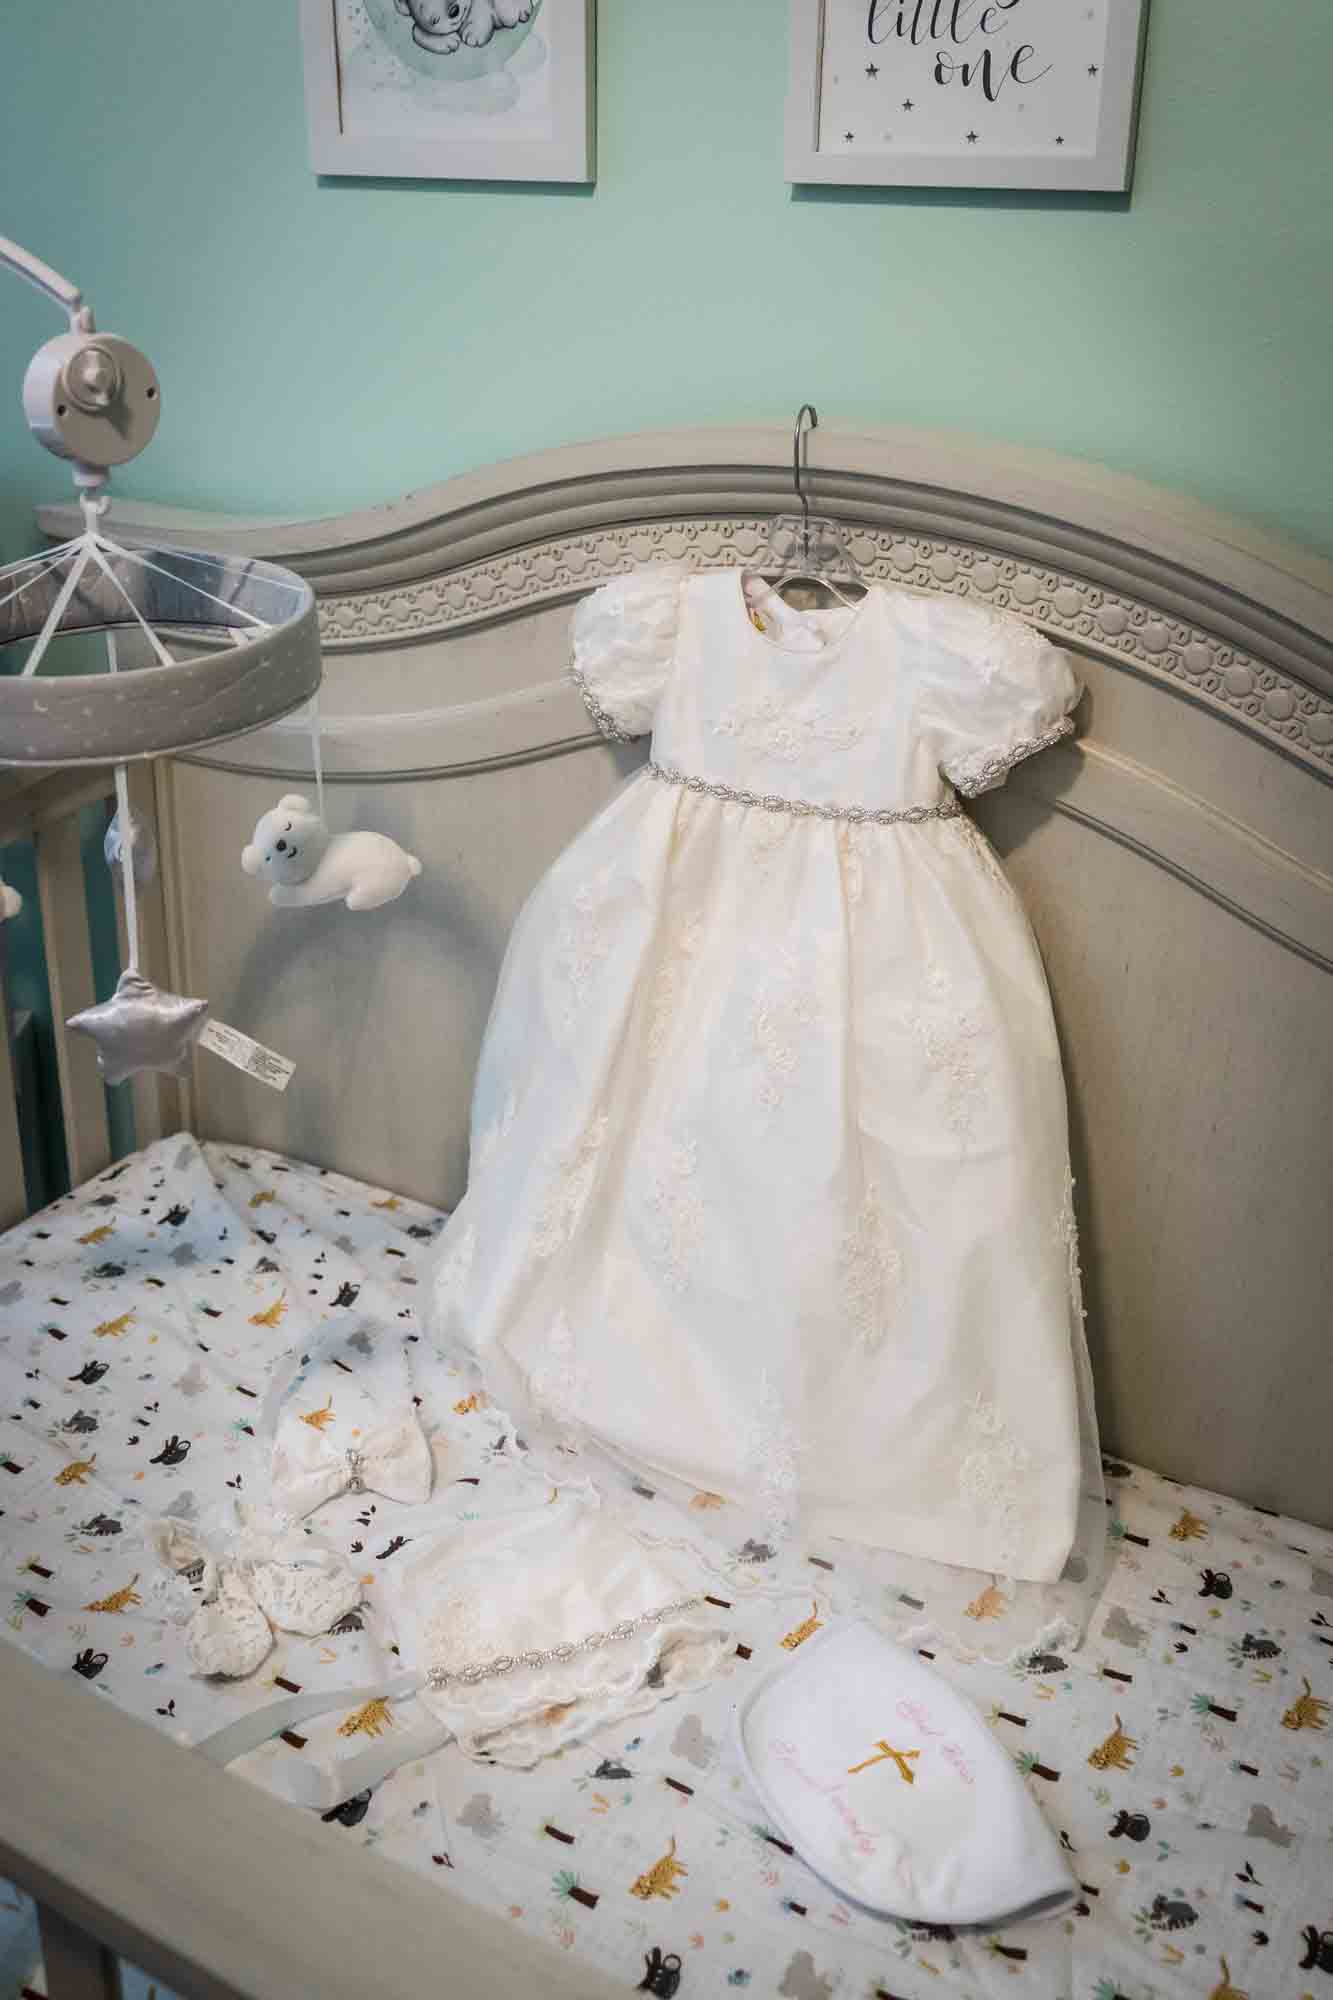 White baptism dress, shoes, and bib lying in crib